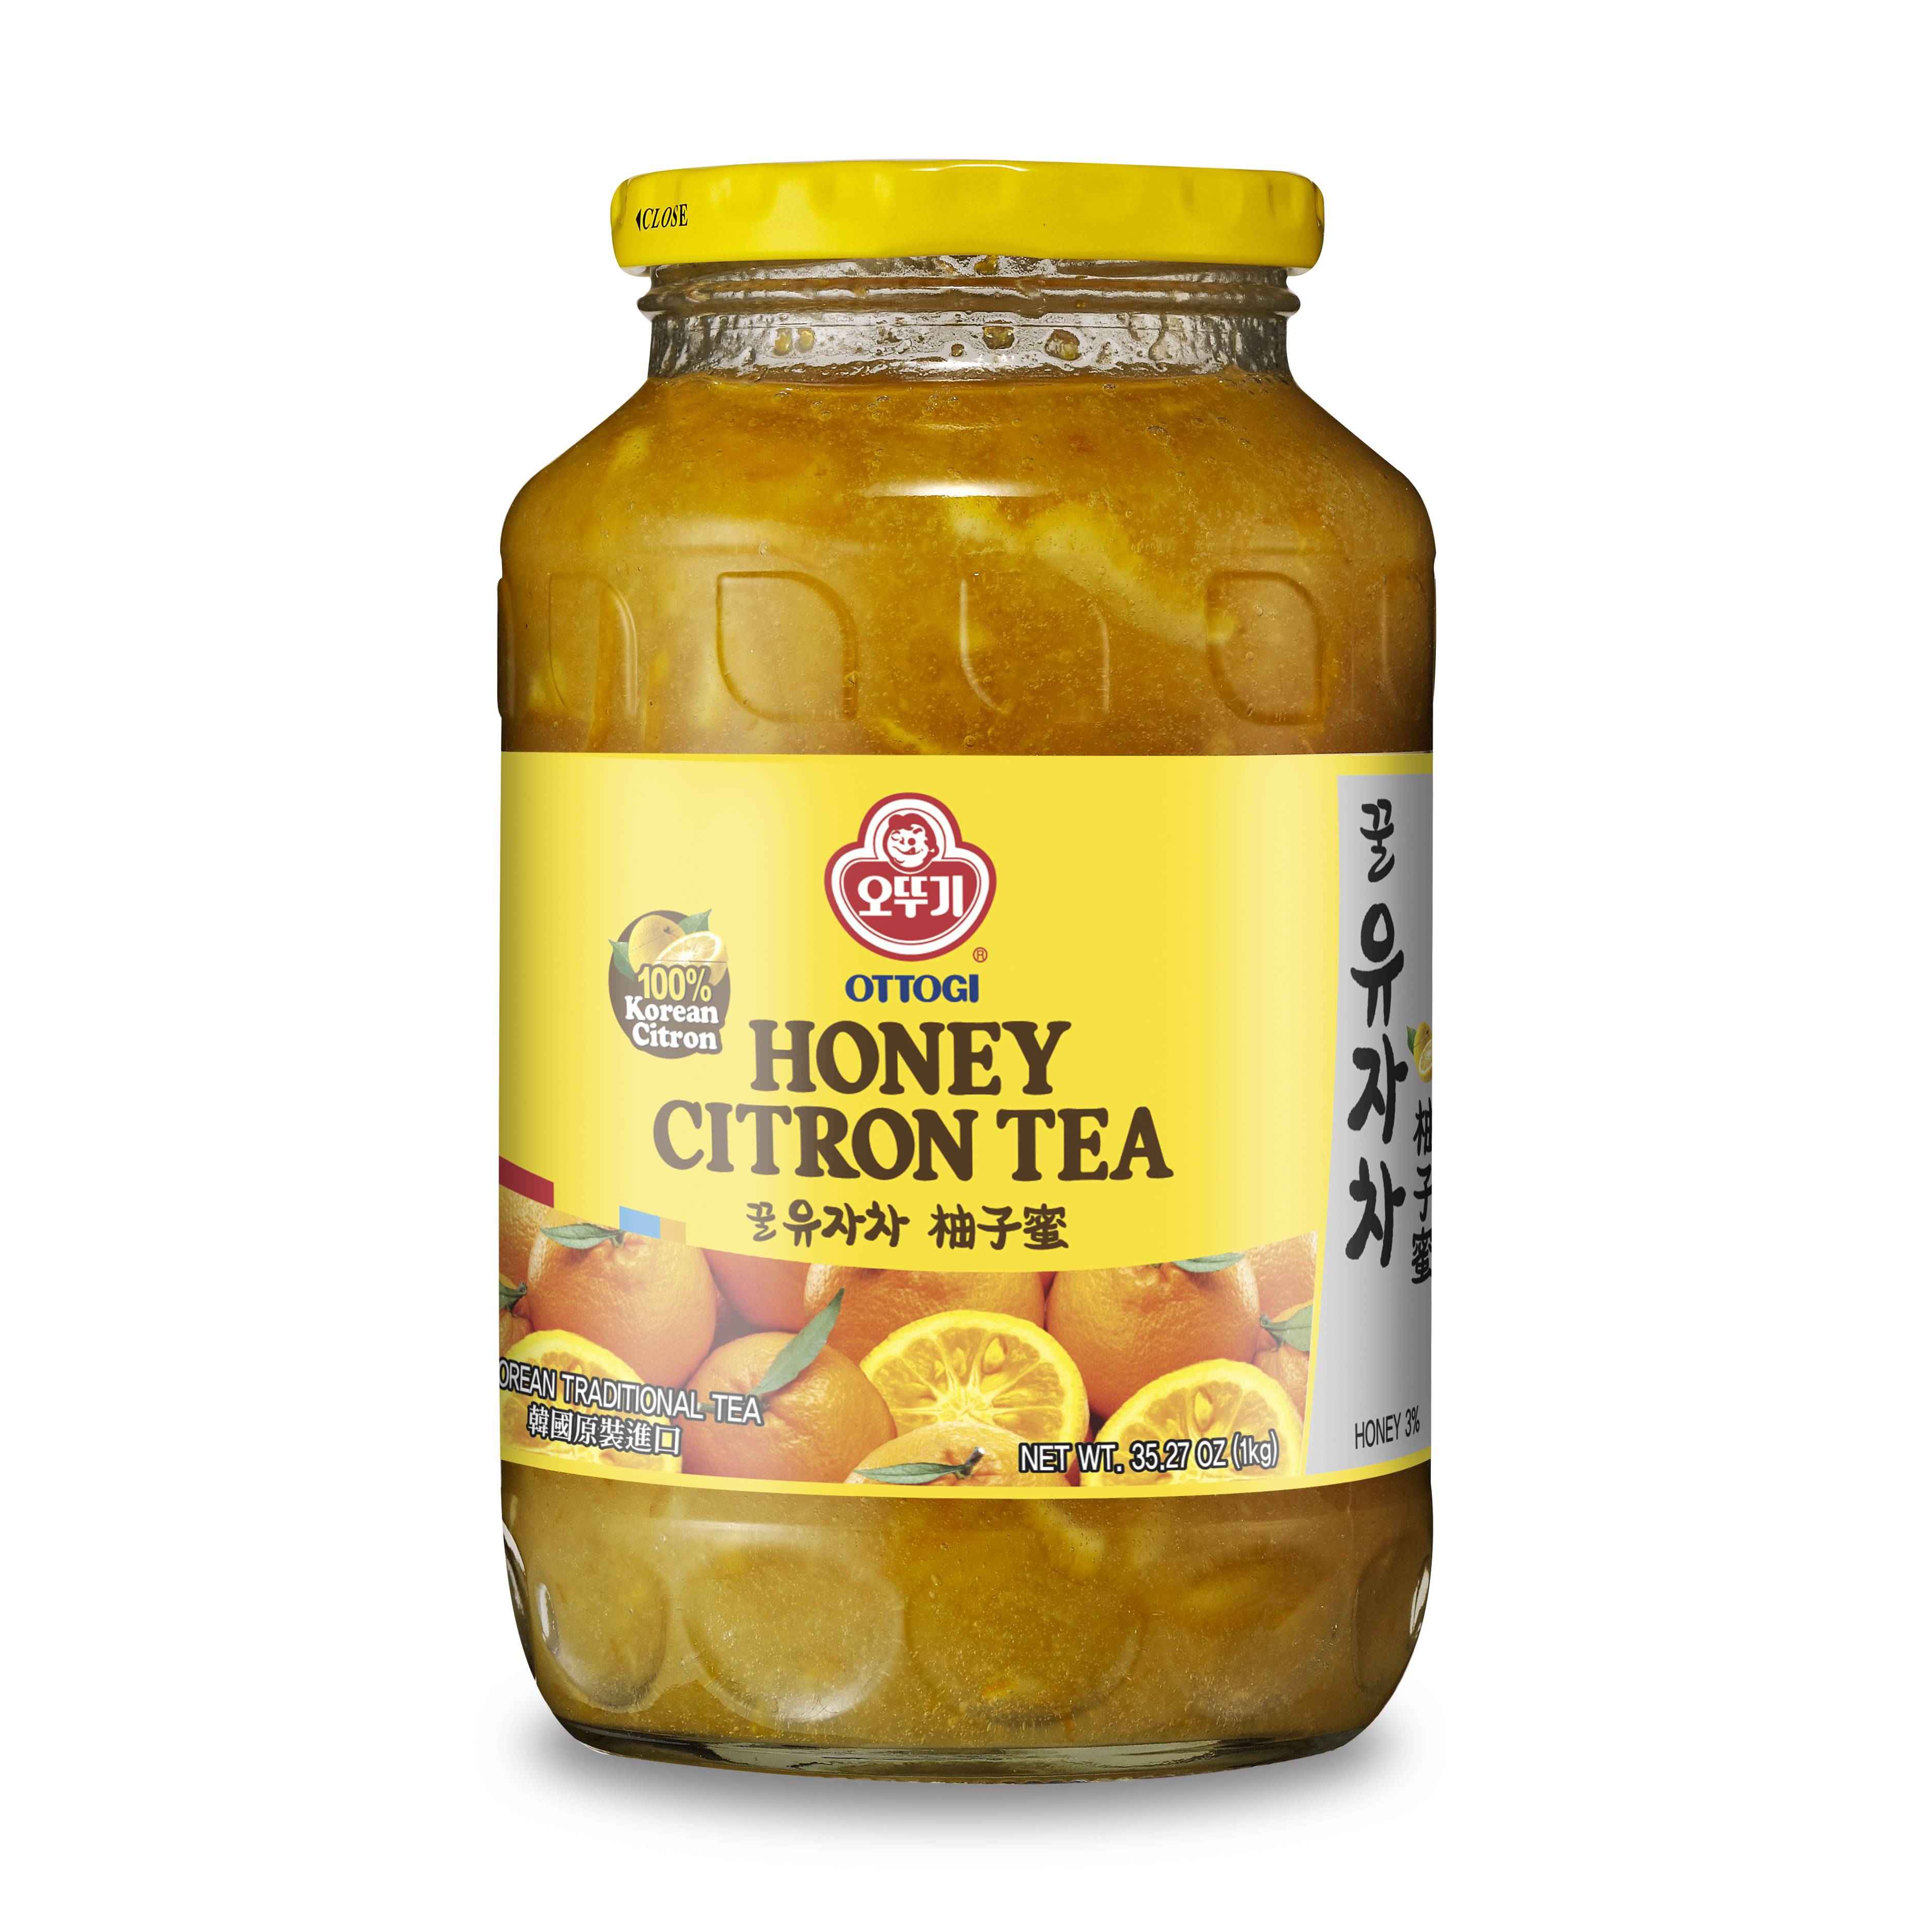 HONEY CITRON TEA